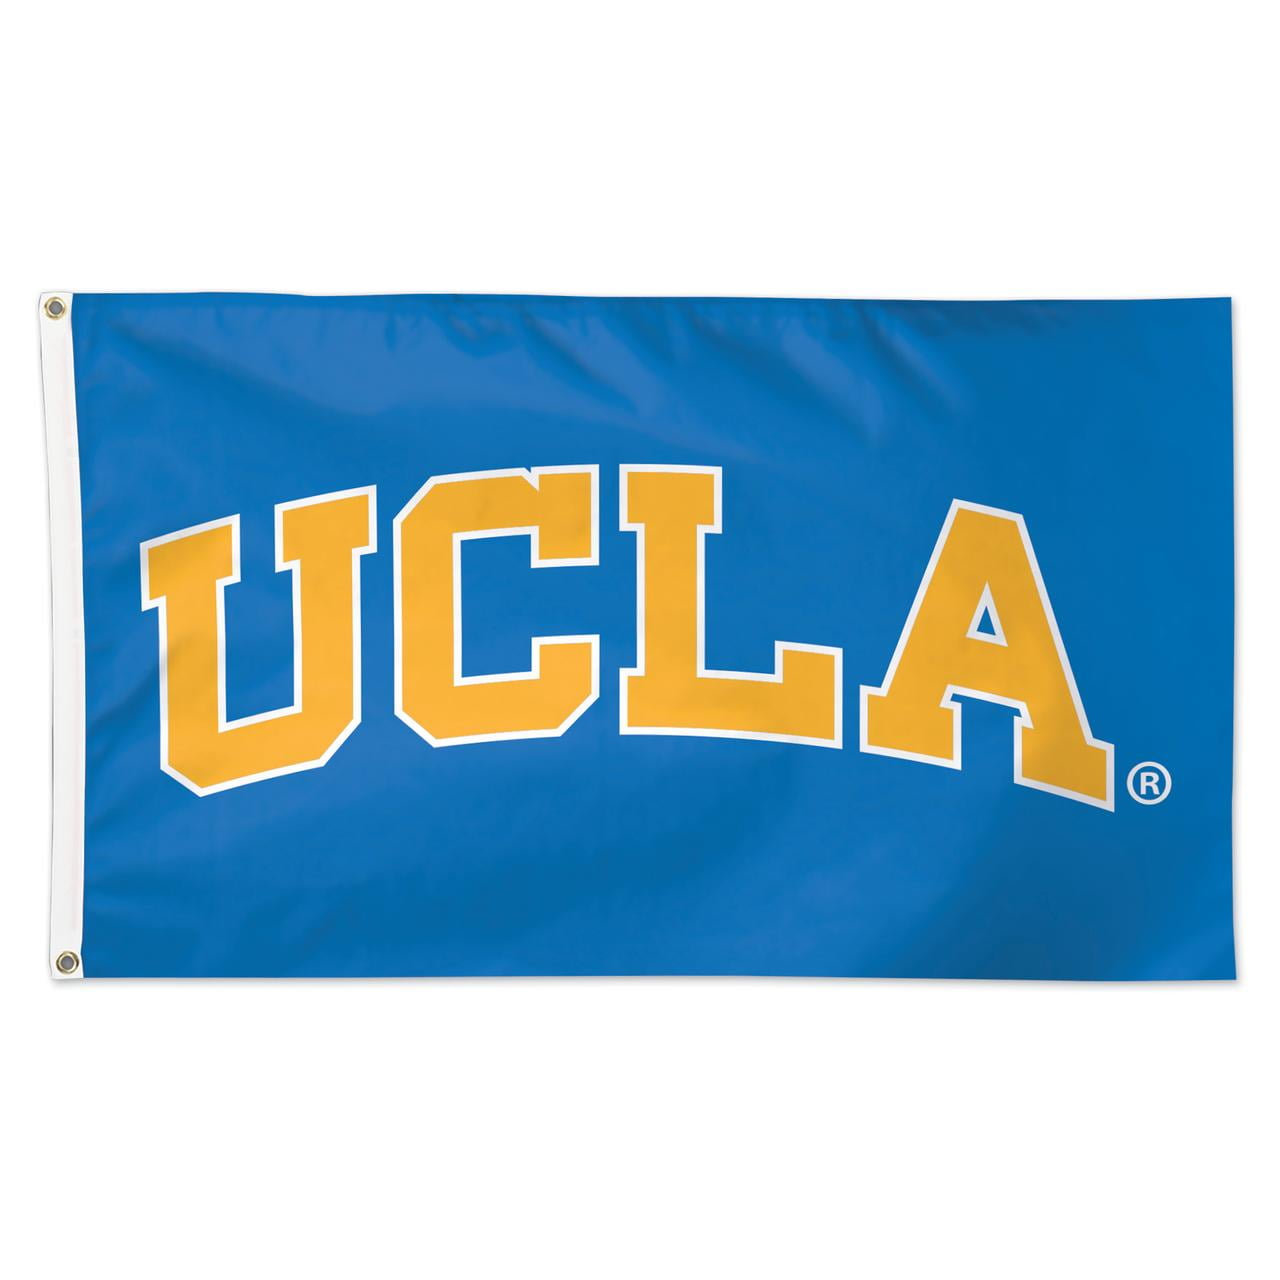 NEW 3ftx5 V UCLA BRUINS NCAA COLLEGE STORE BANNER FLAG 